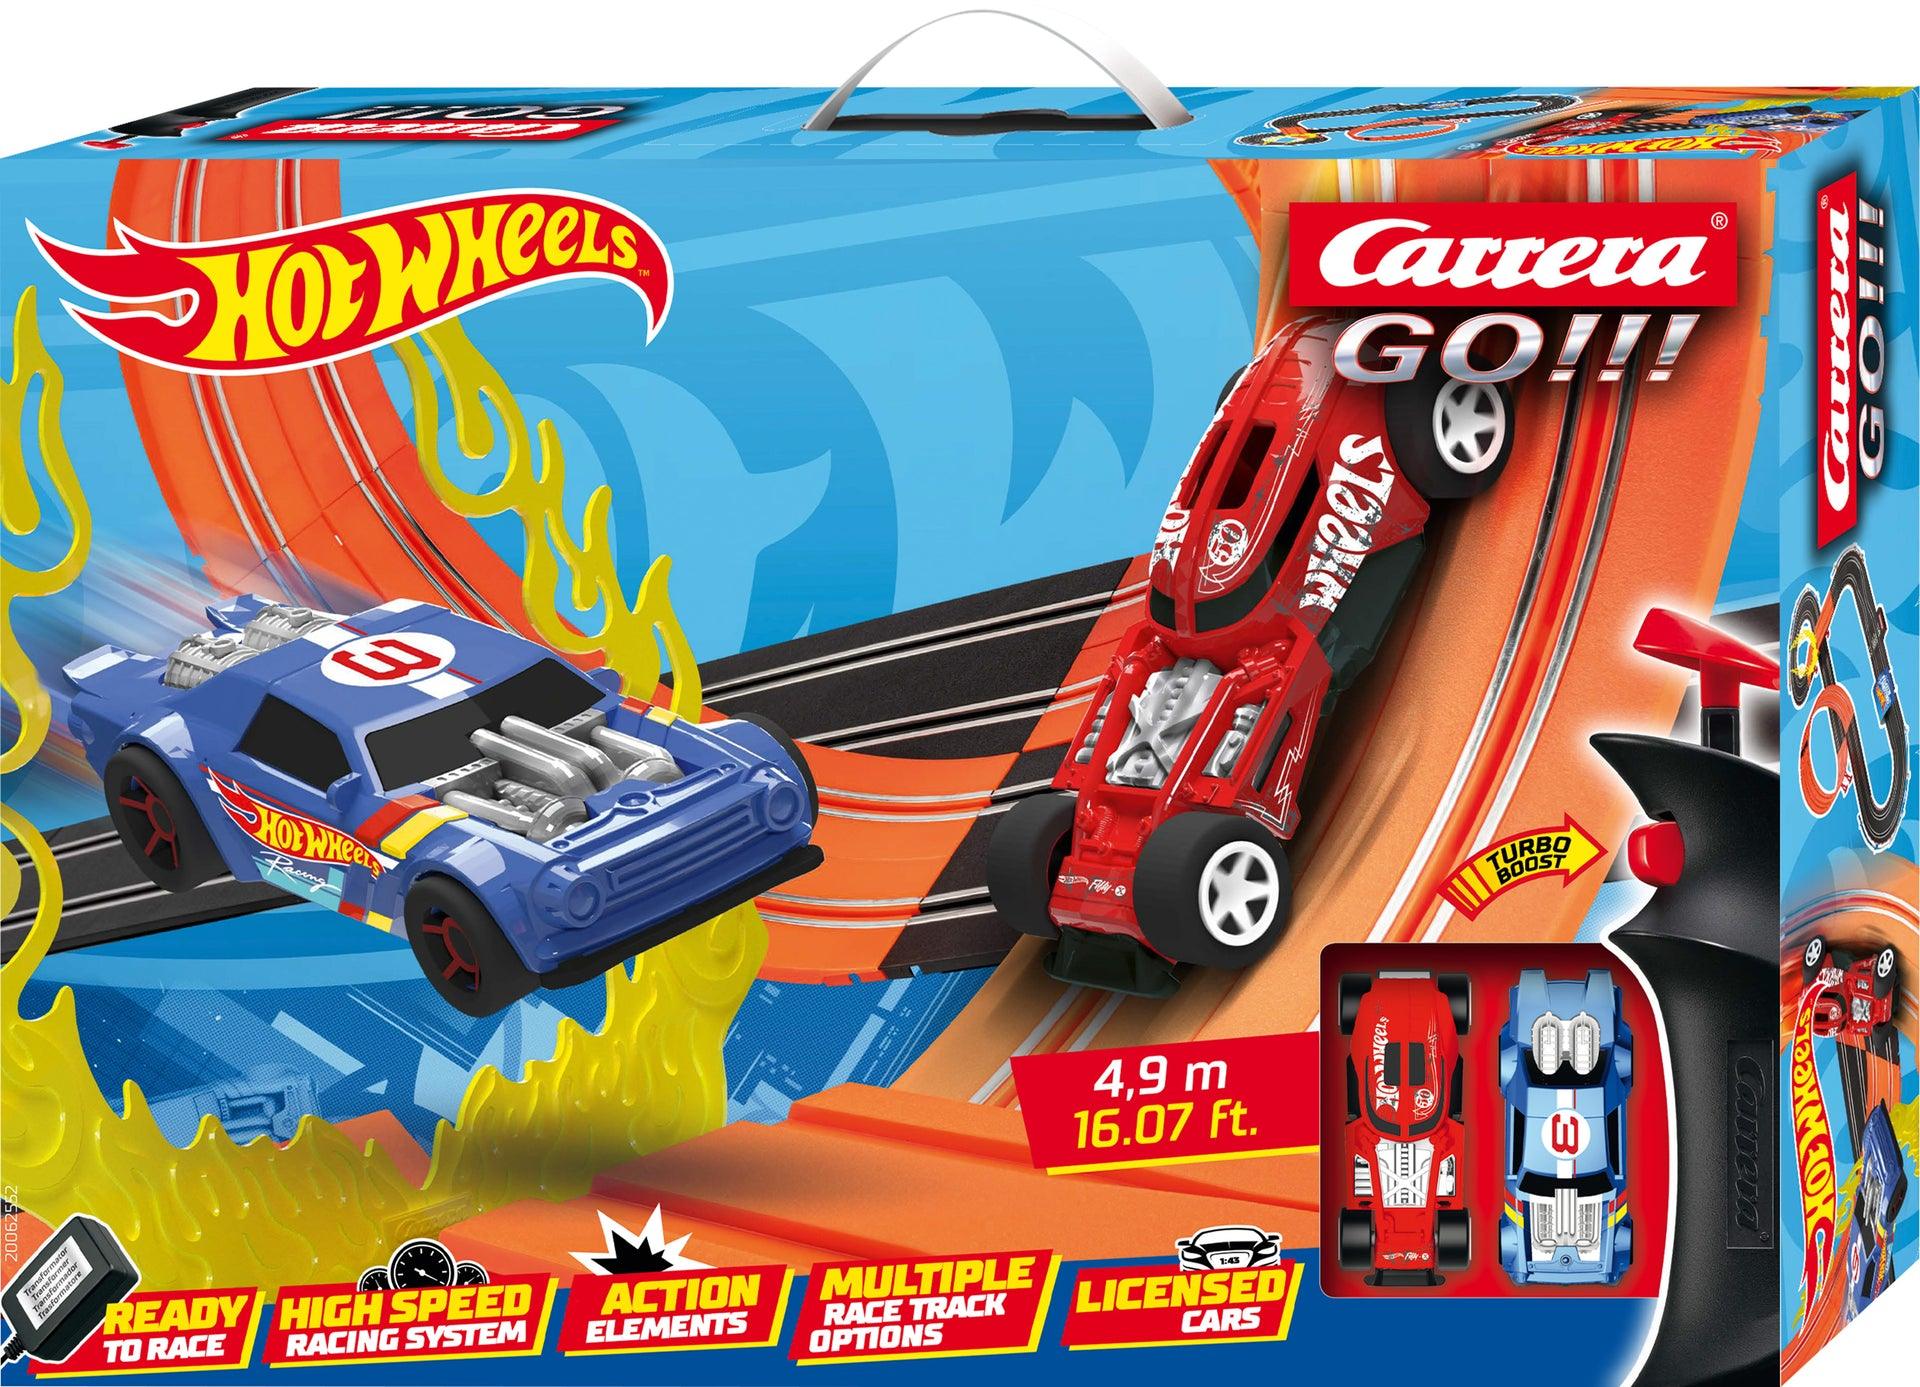 Carrera Go!!! Hot Wheels 4.9 Track Playset – TOYBOX